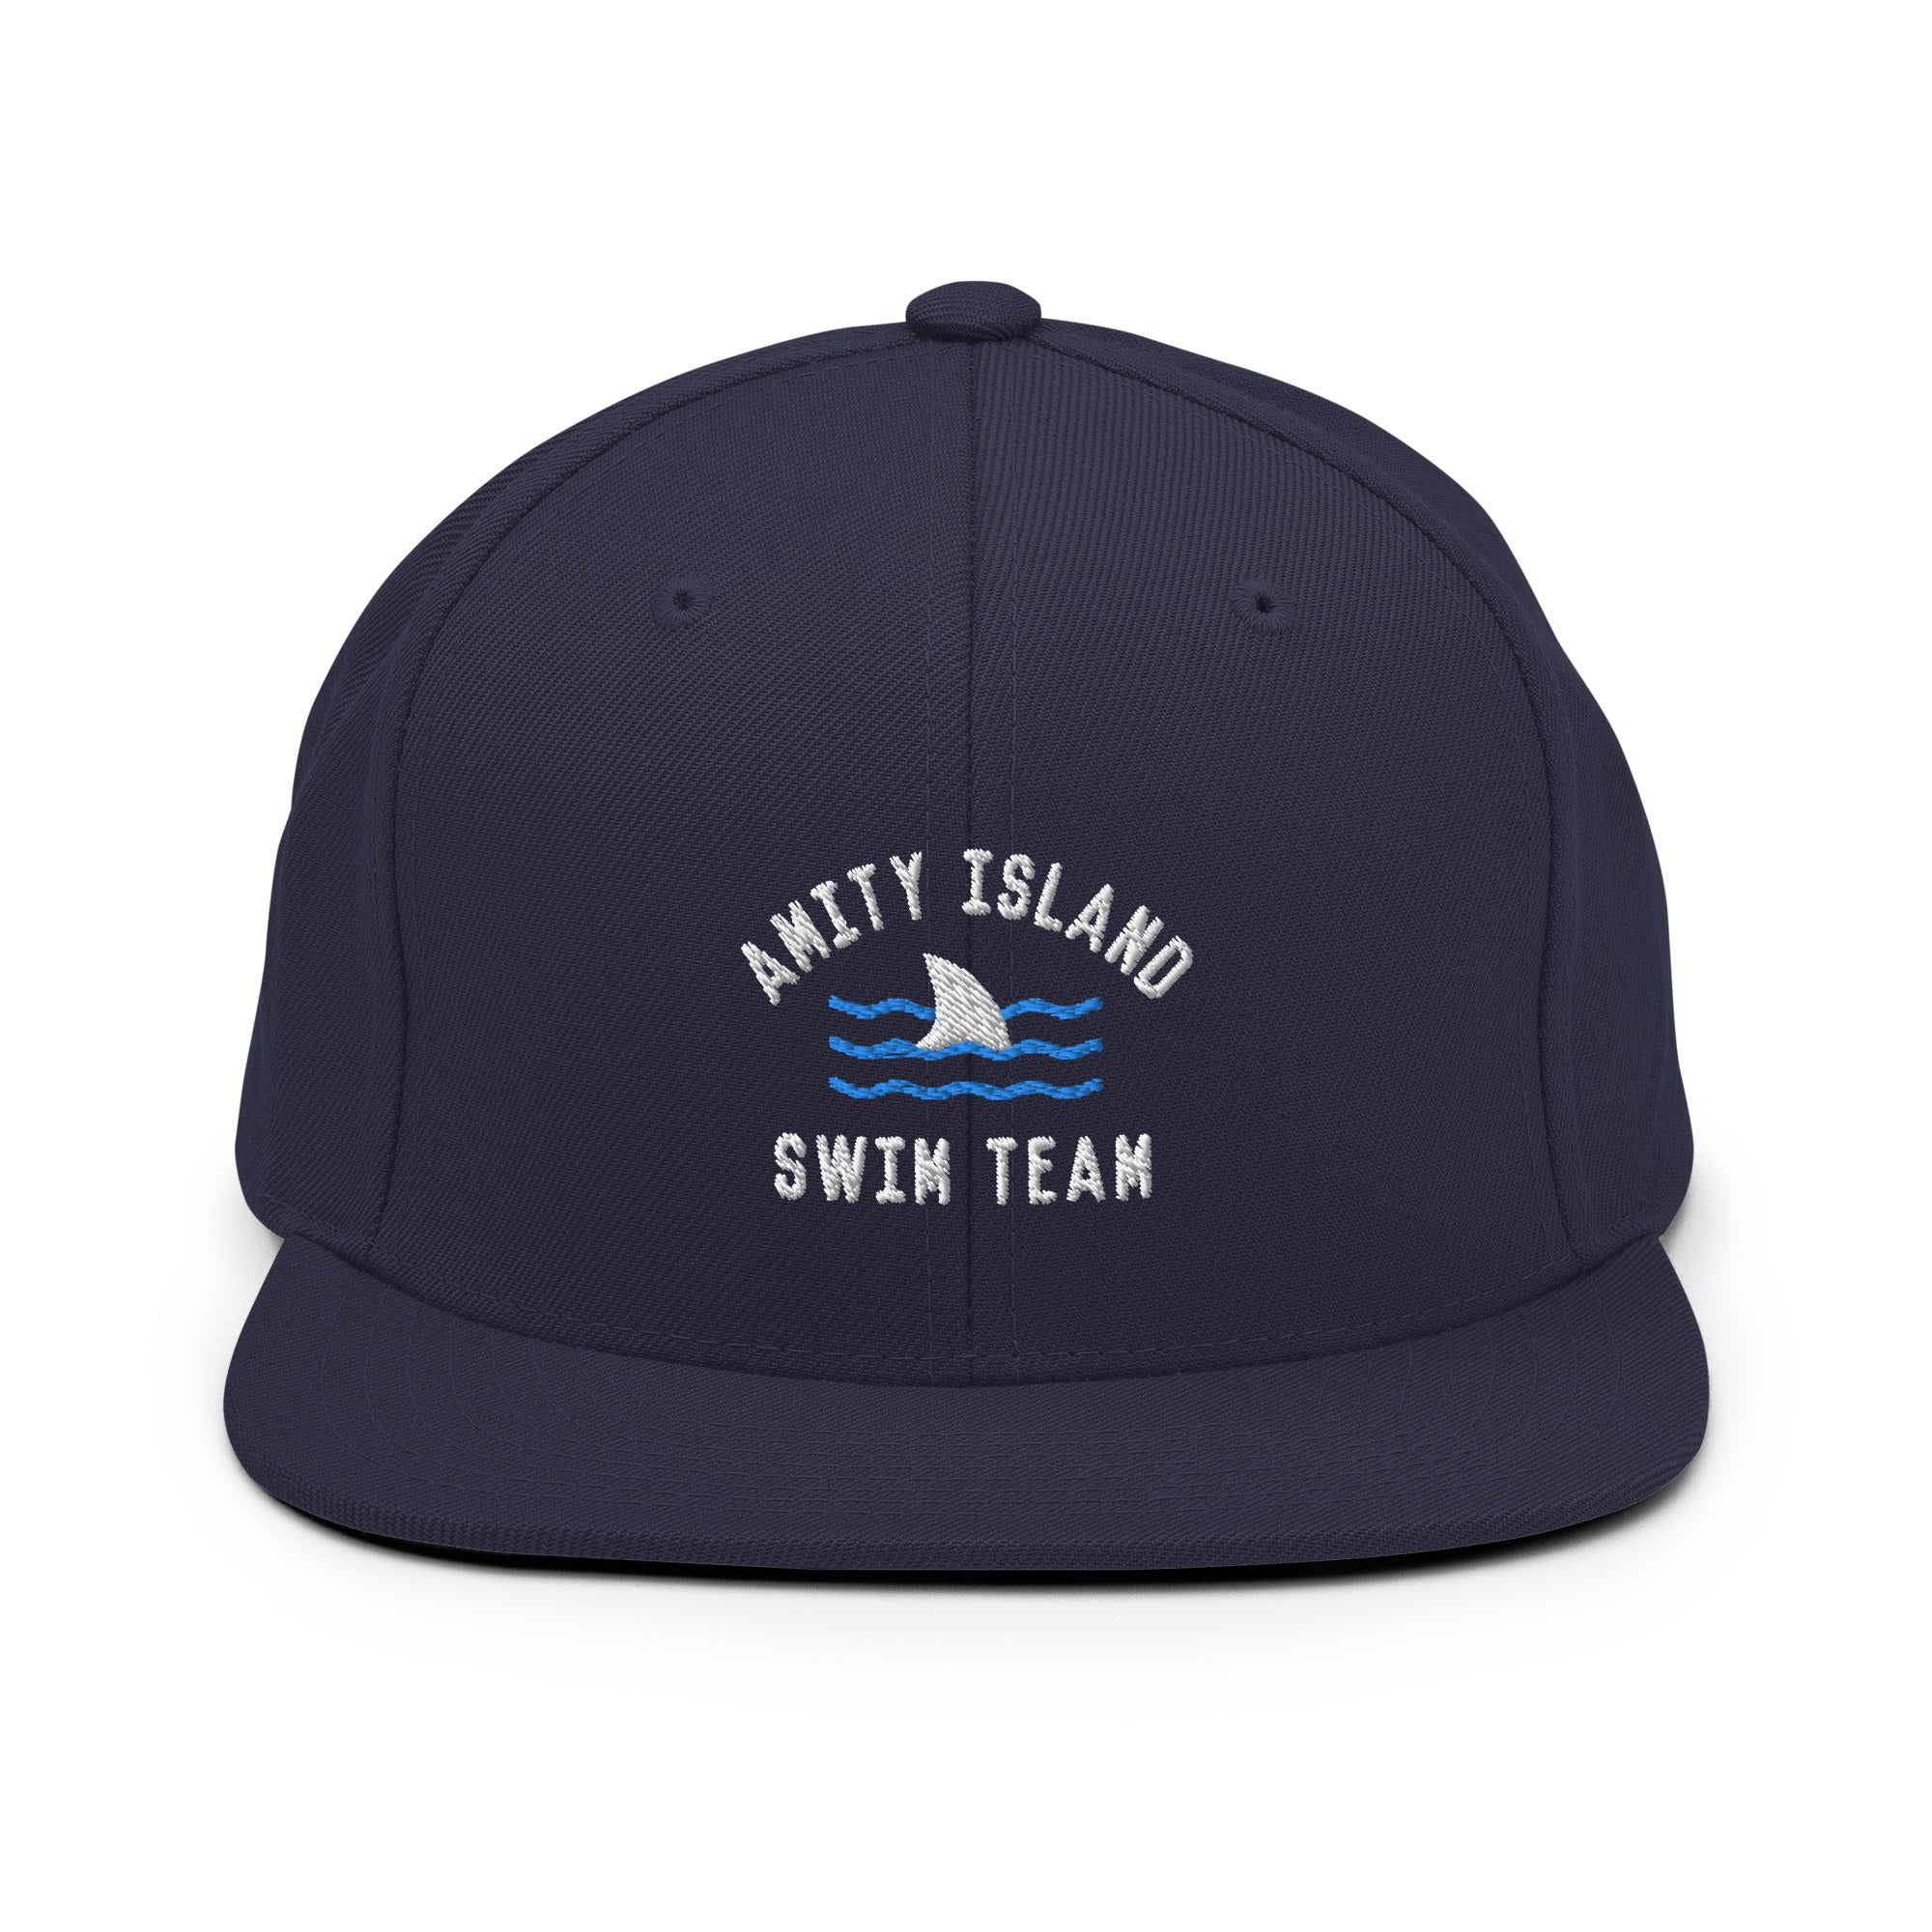 Amity Island Swim Team - Snapback Hat